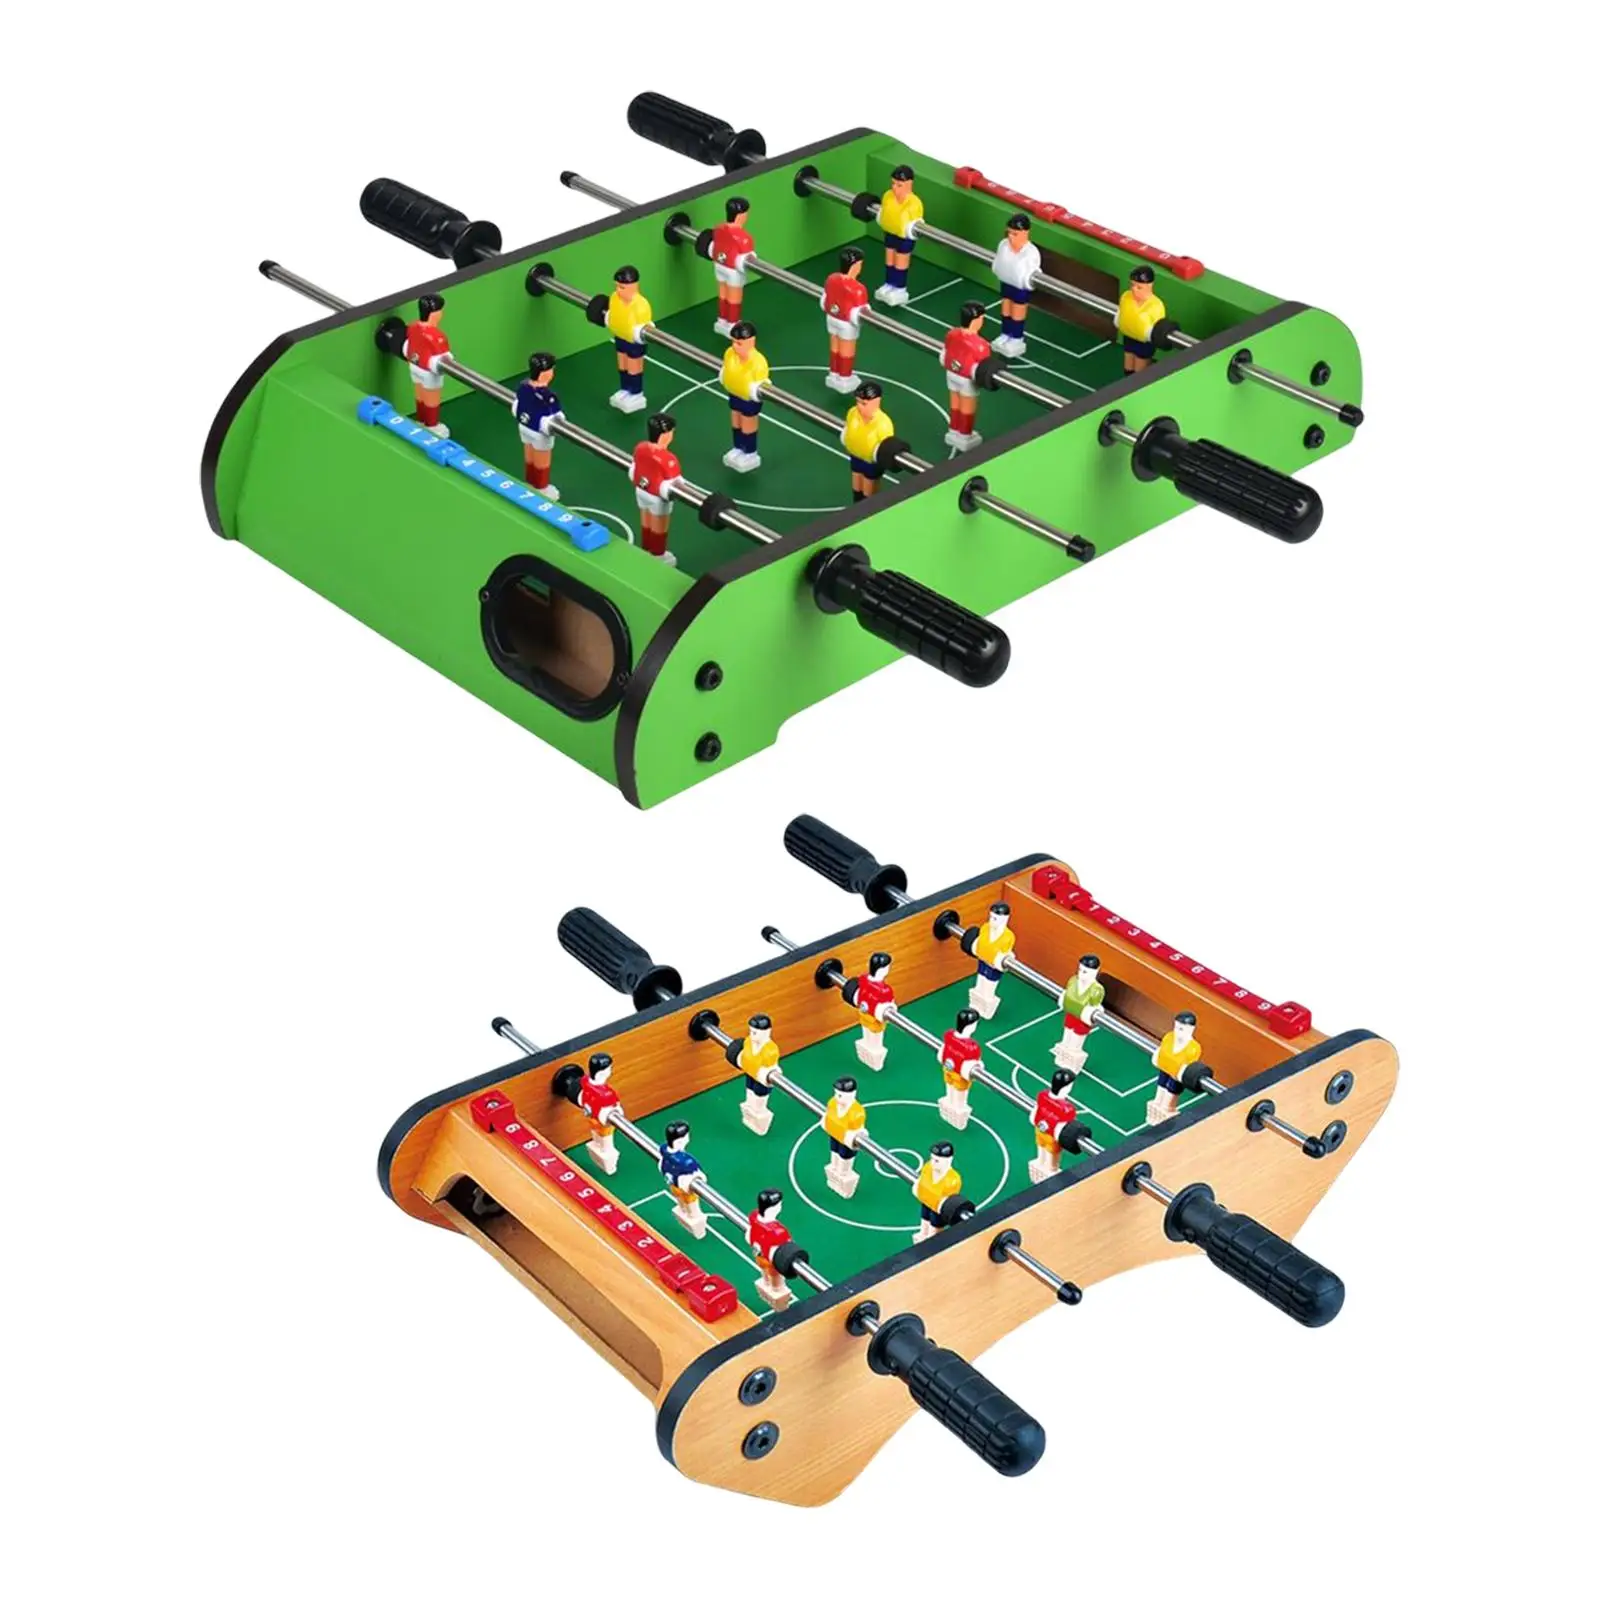 Wooden Tabletop Football Soccer Pinball Games Interesting for Family